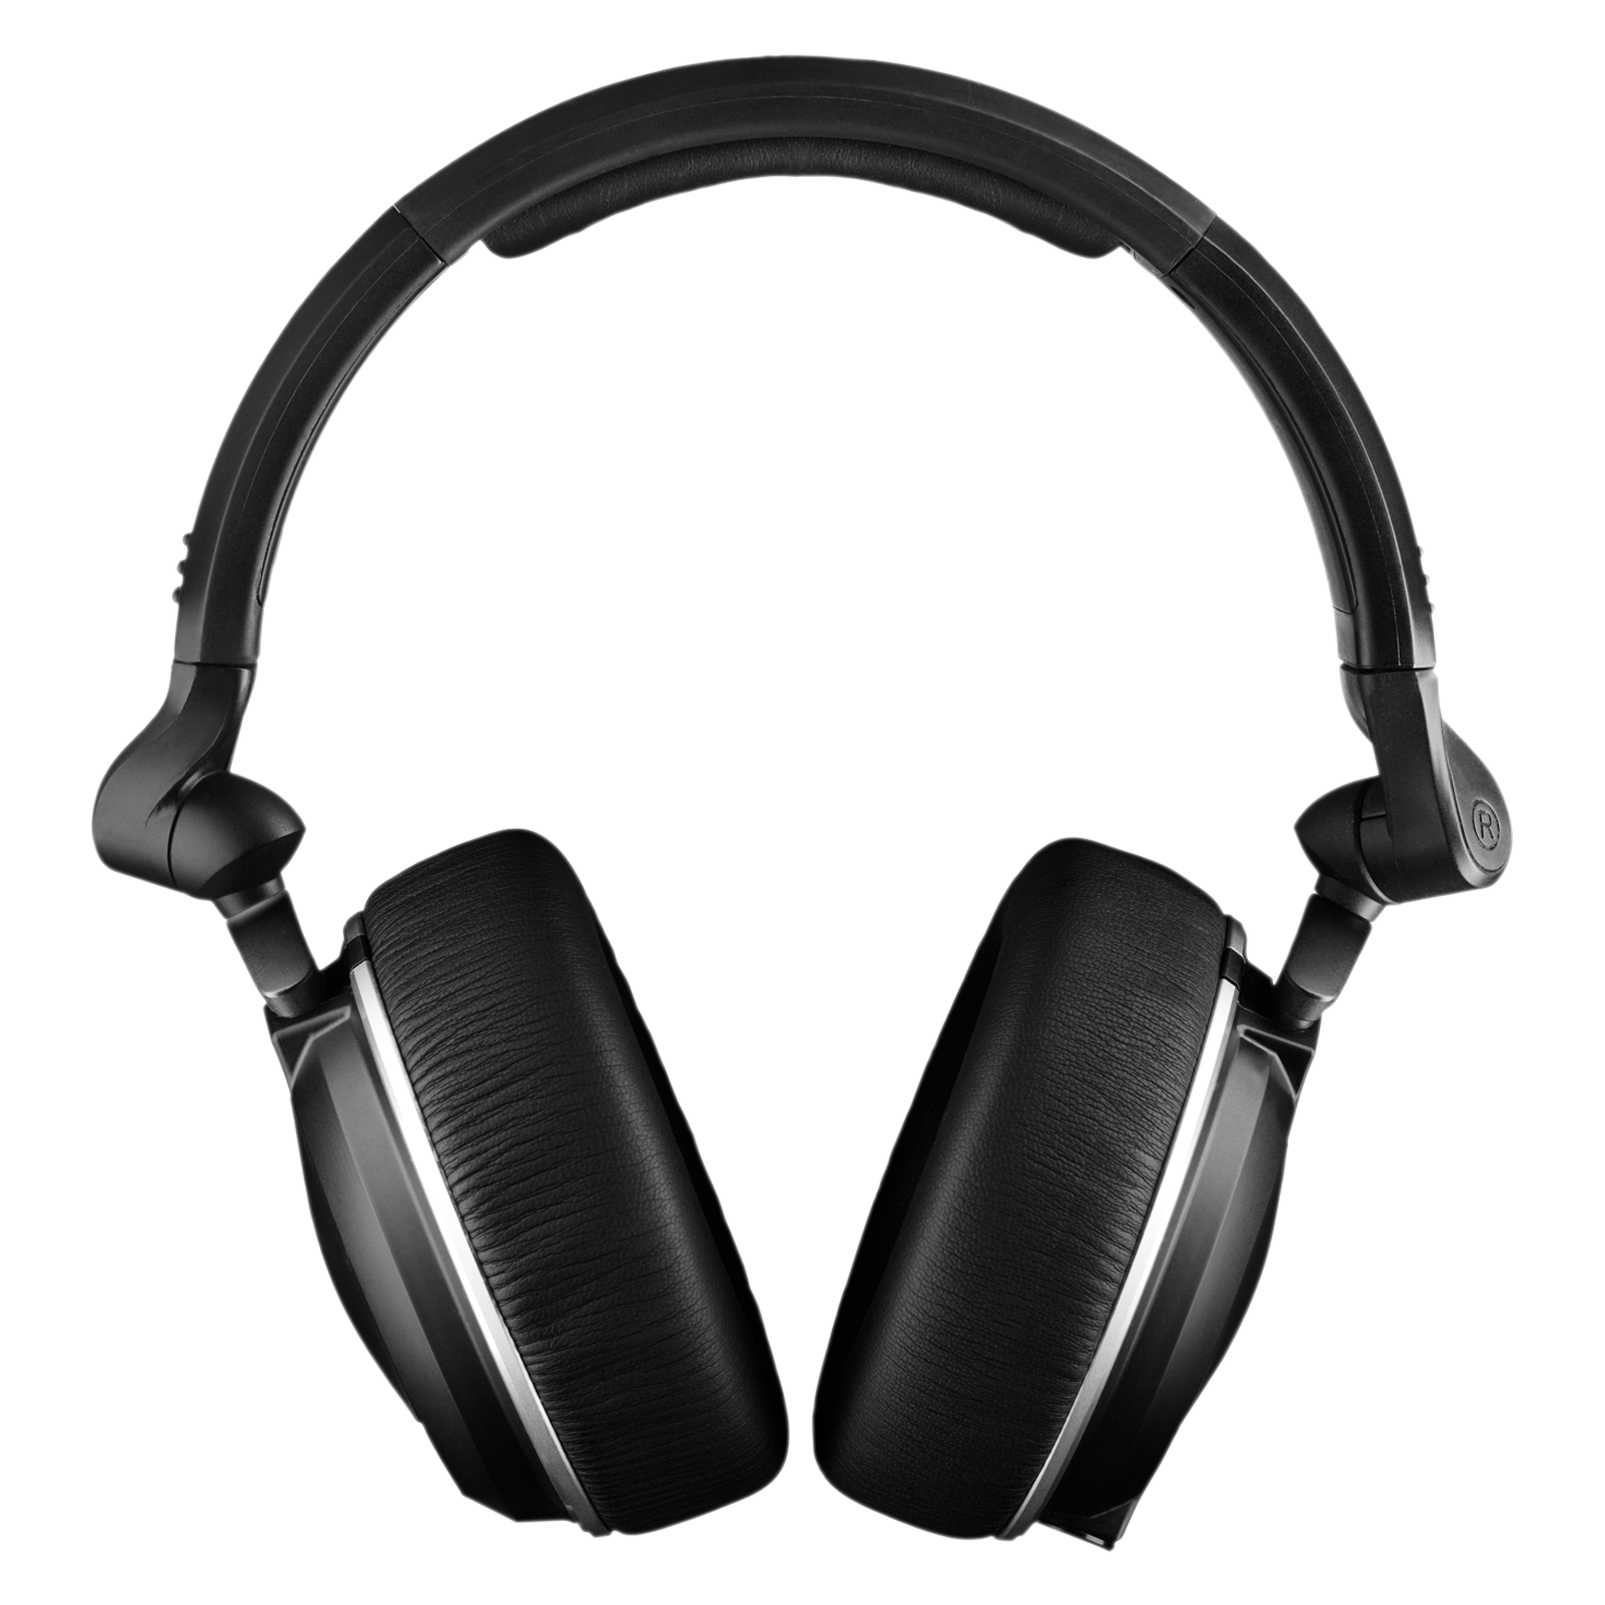 K182 - Black - Professional closed-back monitor headphones  - Front